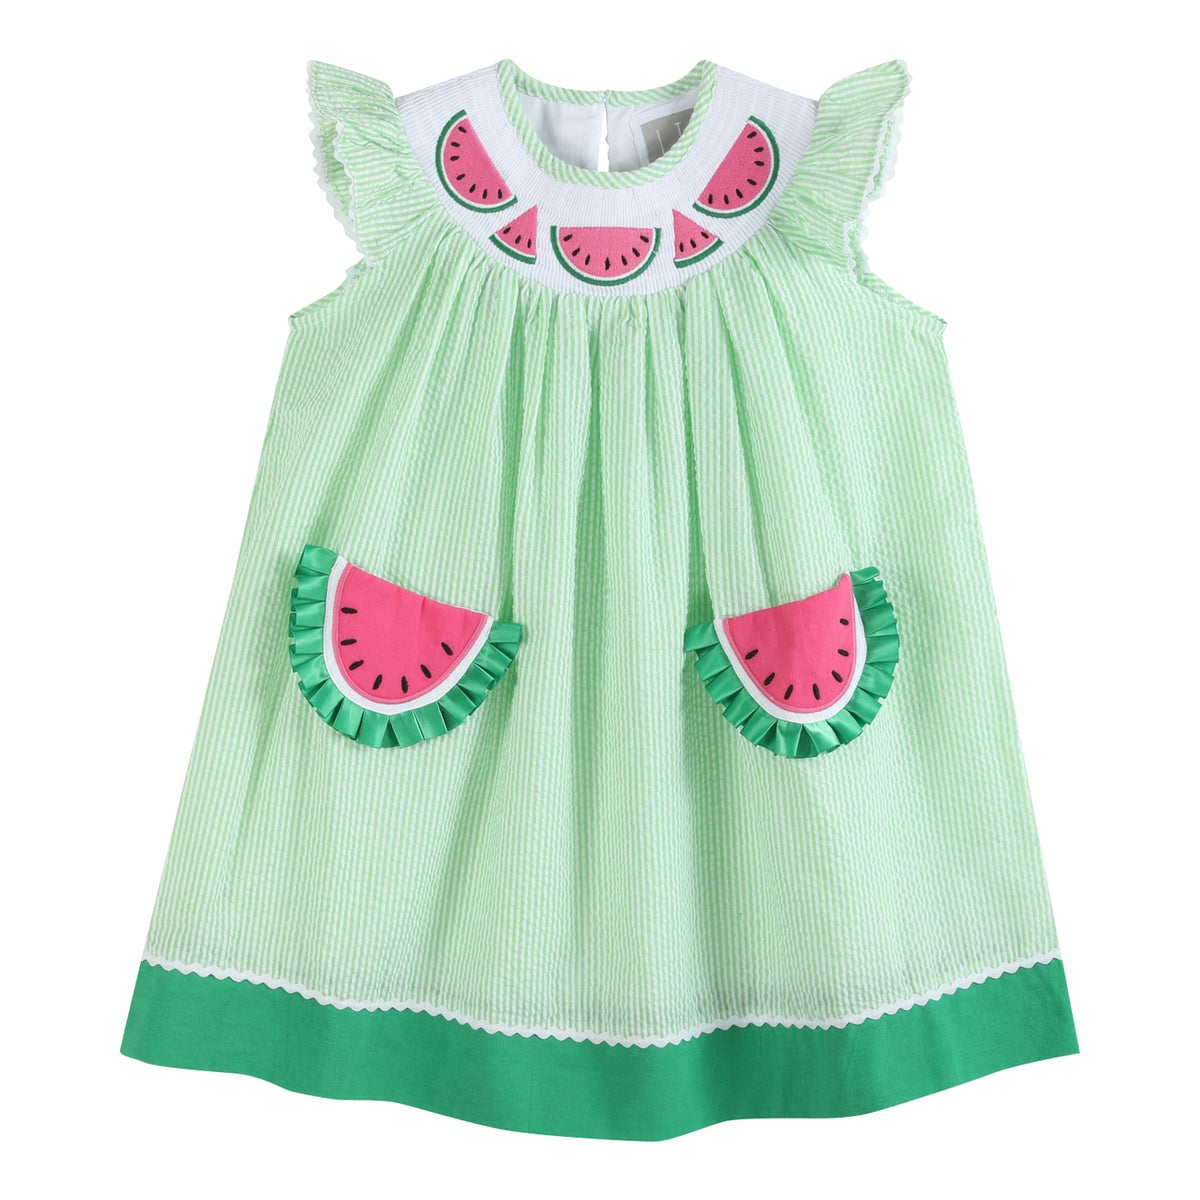 Watermelon Green Seersucker Bishop Dress